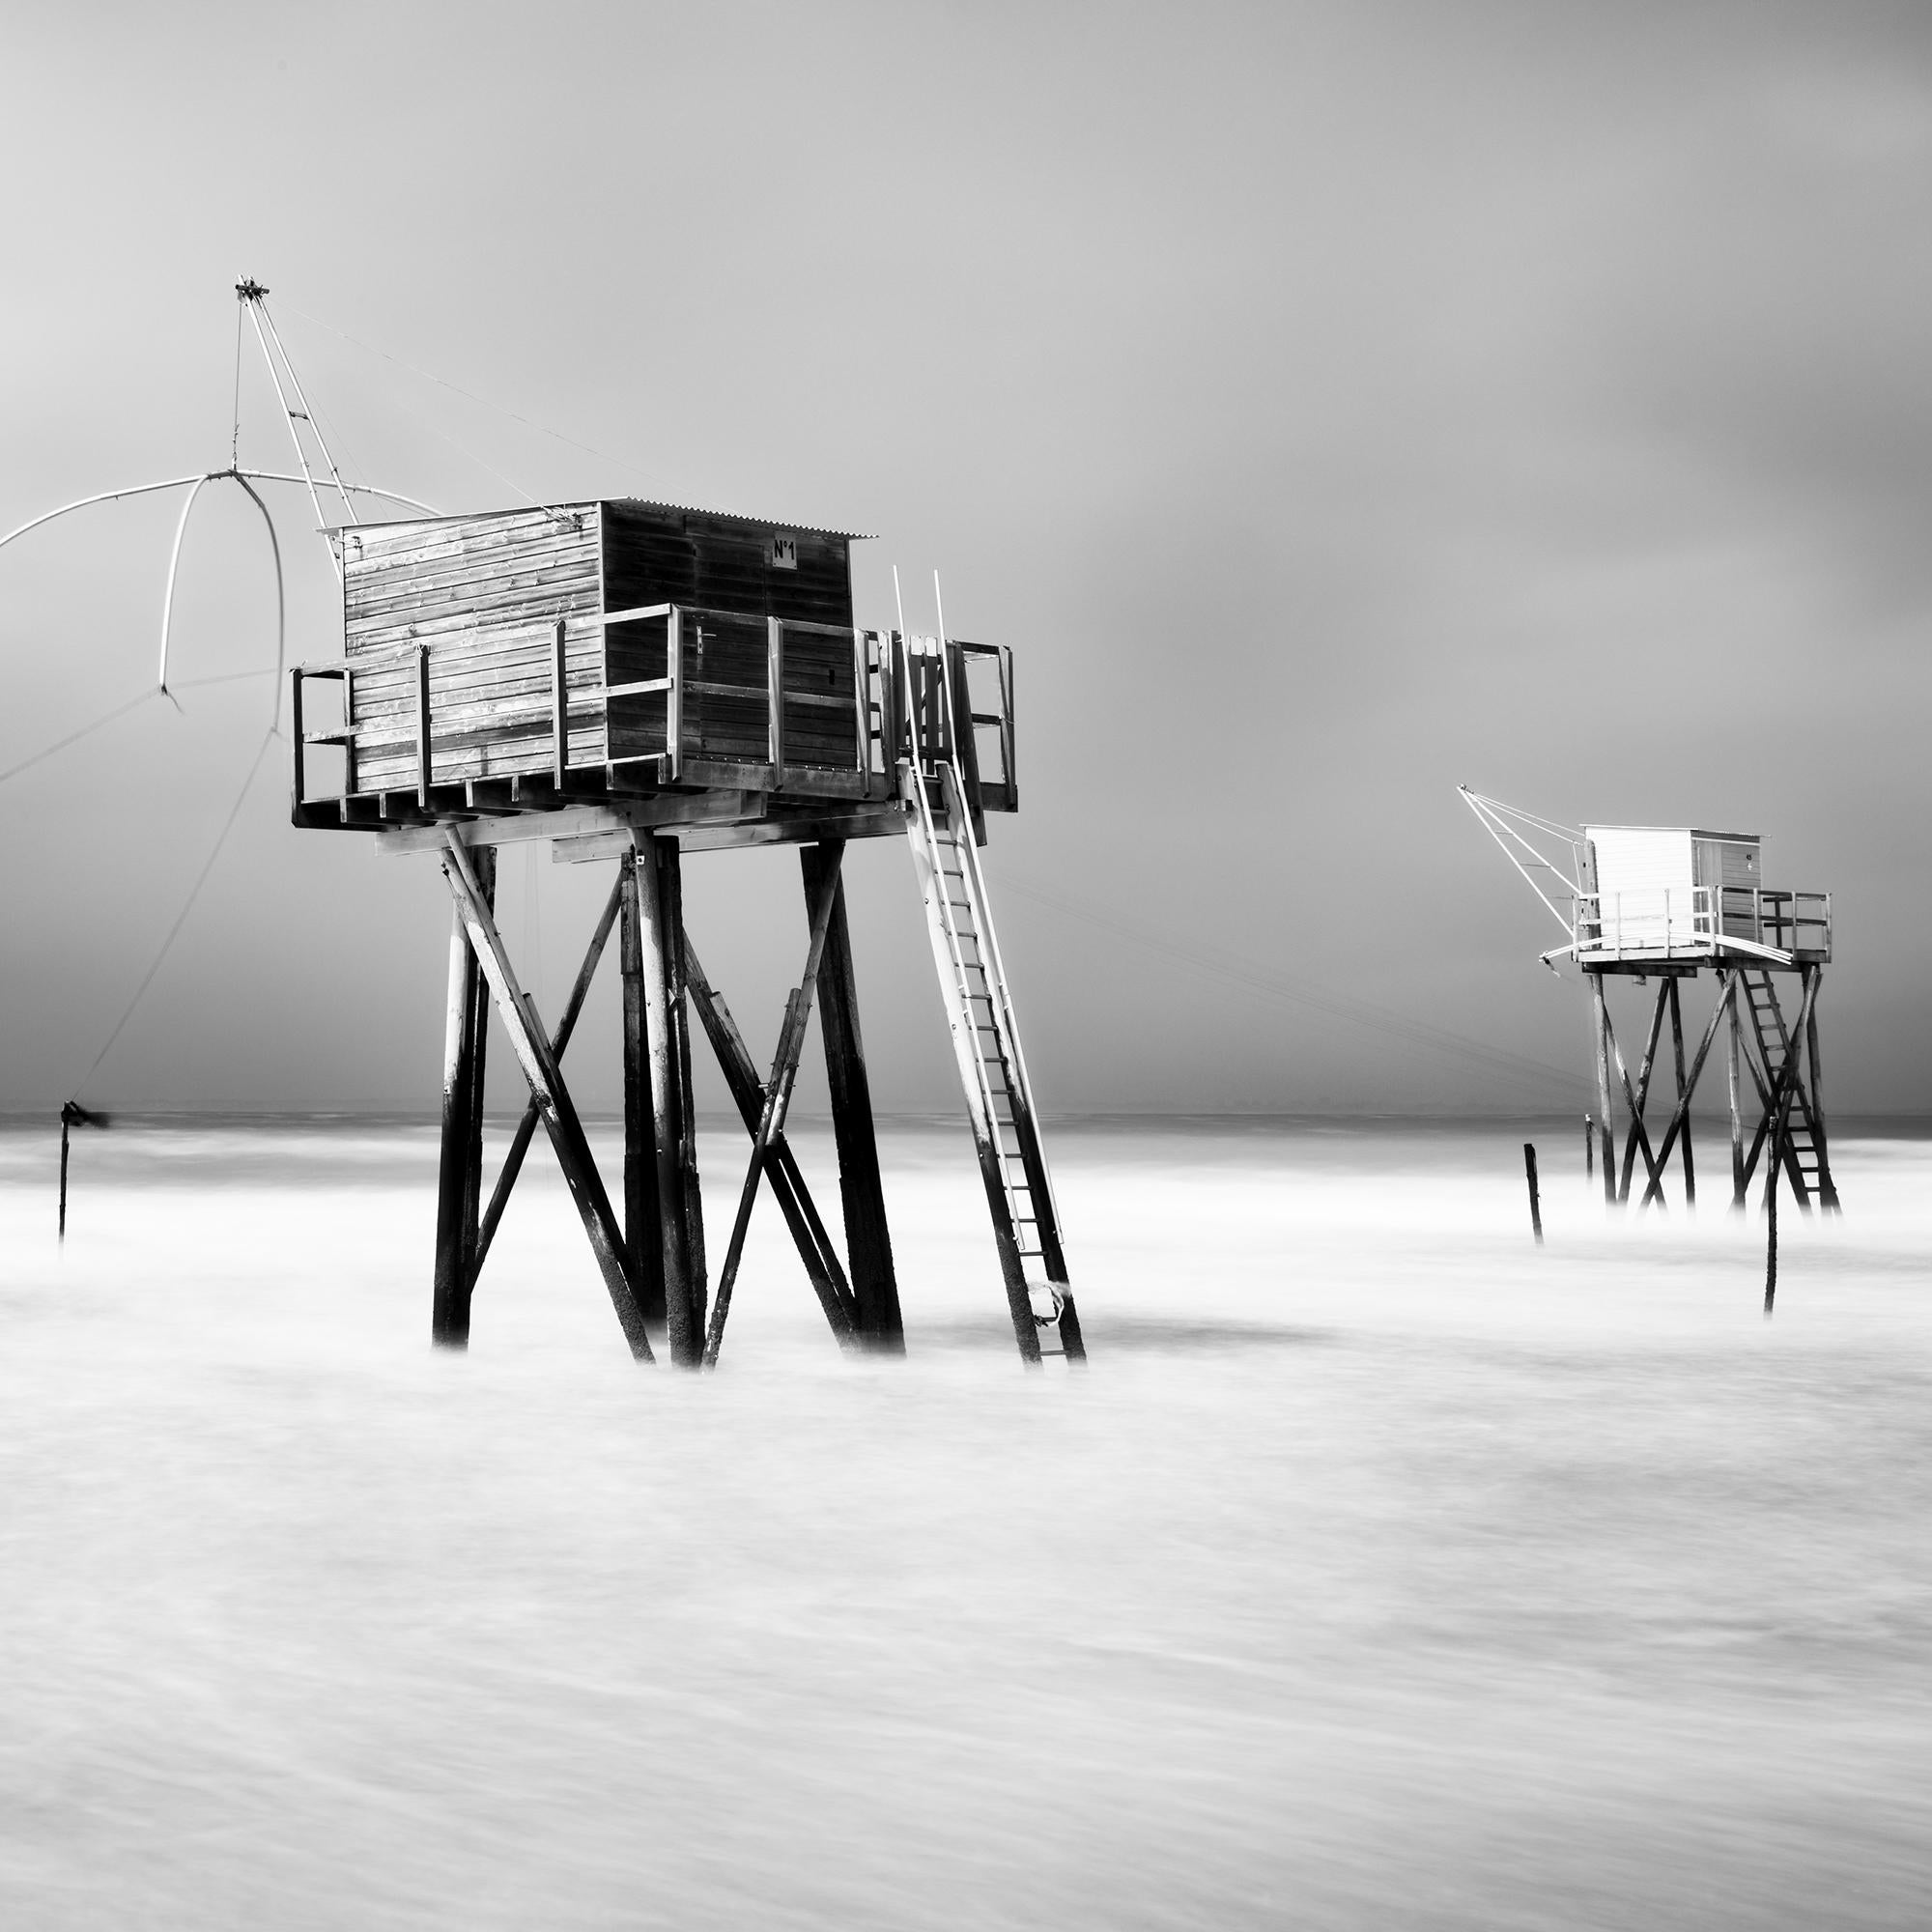 Fishing Hut On Stilts, surf, shoreline, storm, black white landscape photography For Sale 3